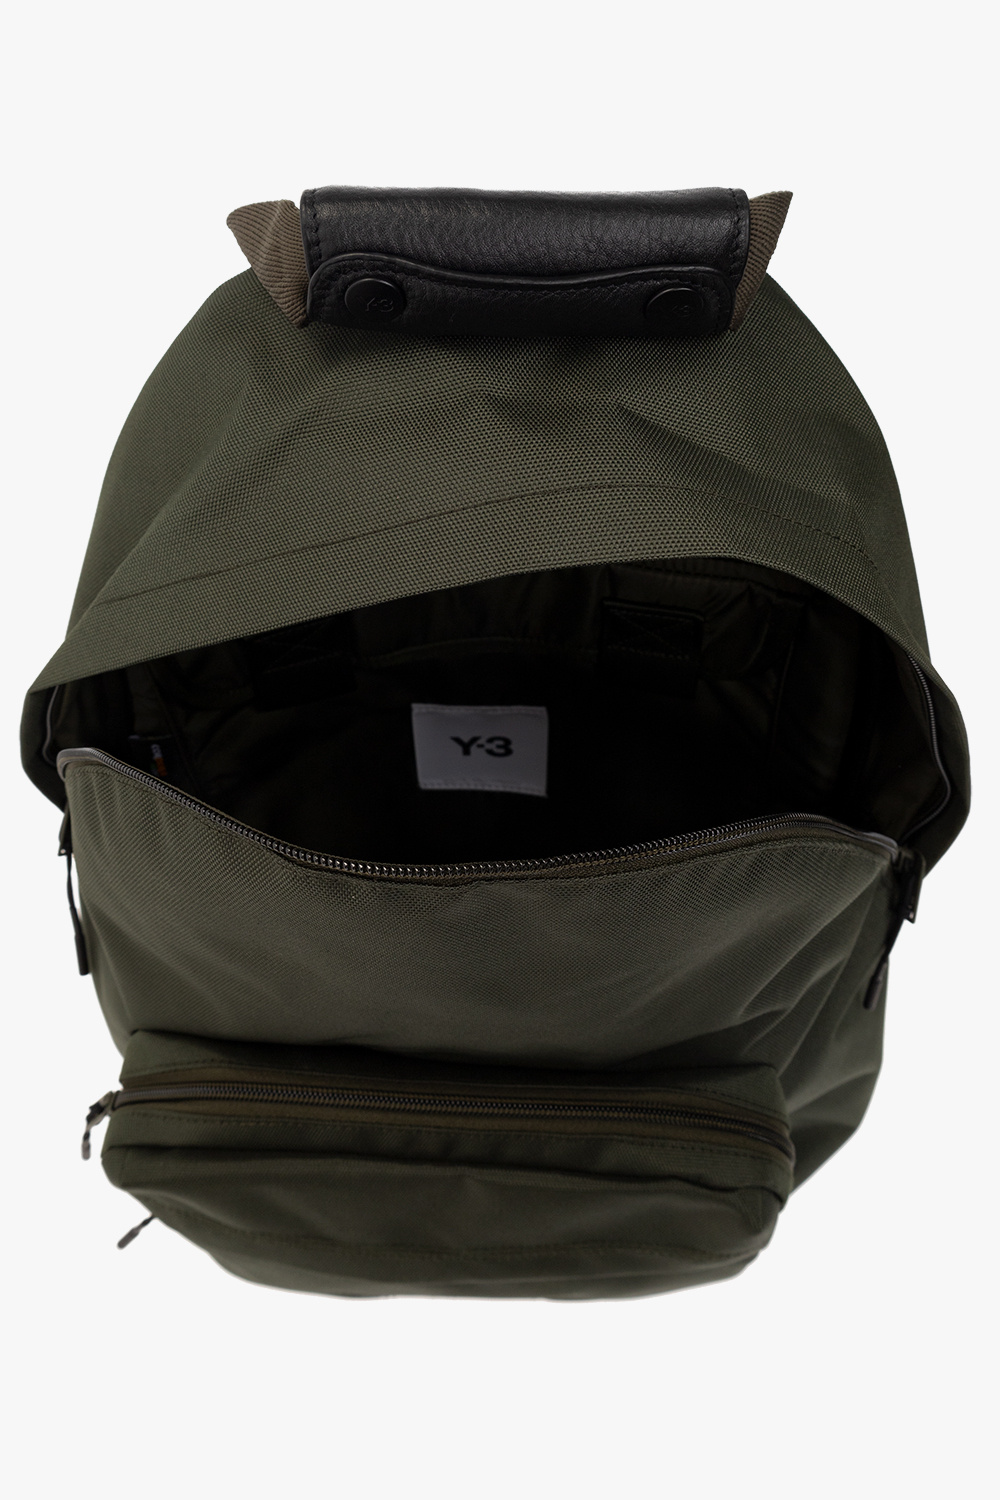 Y-3 Yohji Yamamoto BOYY SSENSE Exclusive Green Buckle Pouchette Shoulder Bag